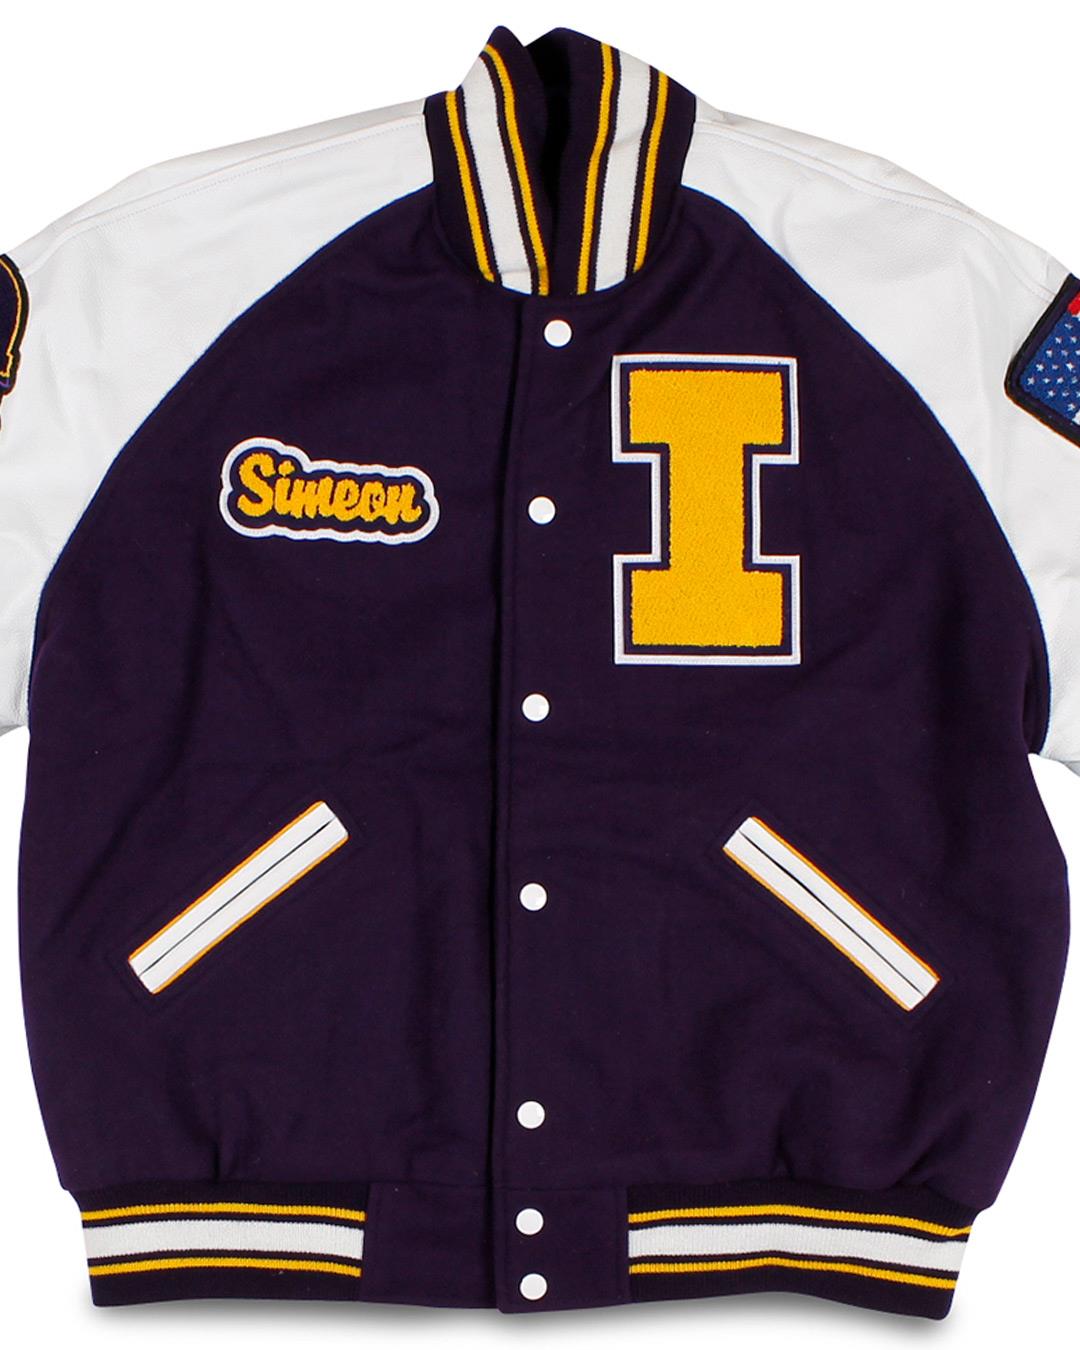 Issaquah High School Letterman Jacket, Issaquah WA - Front 2